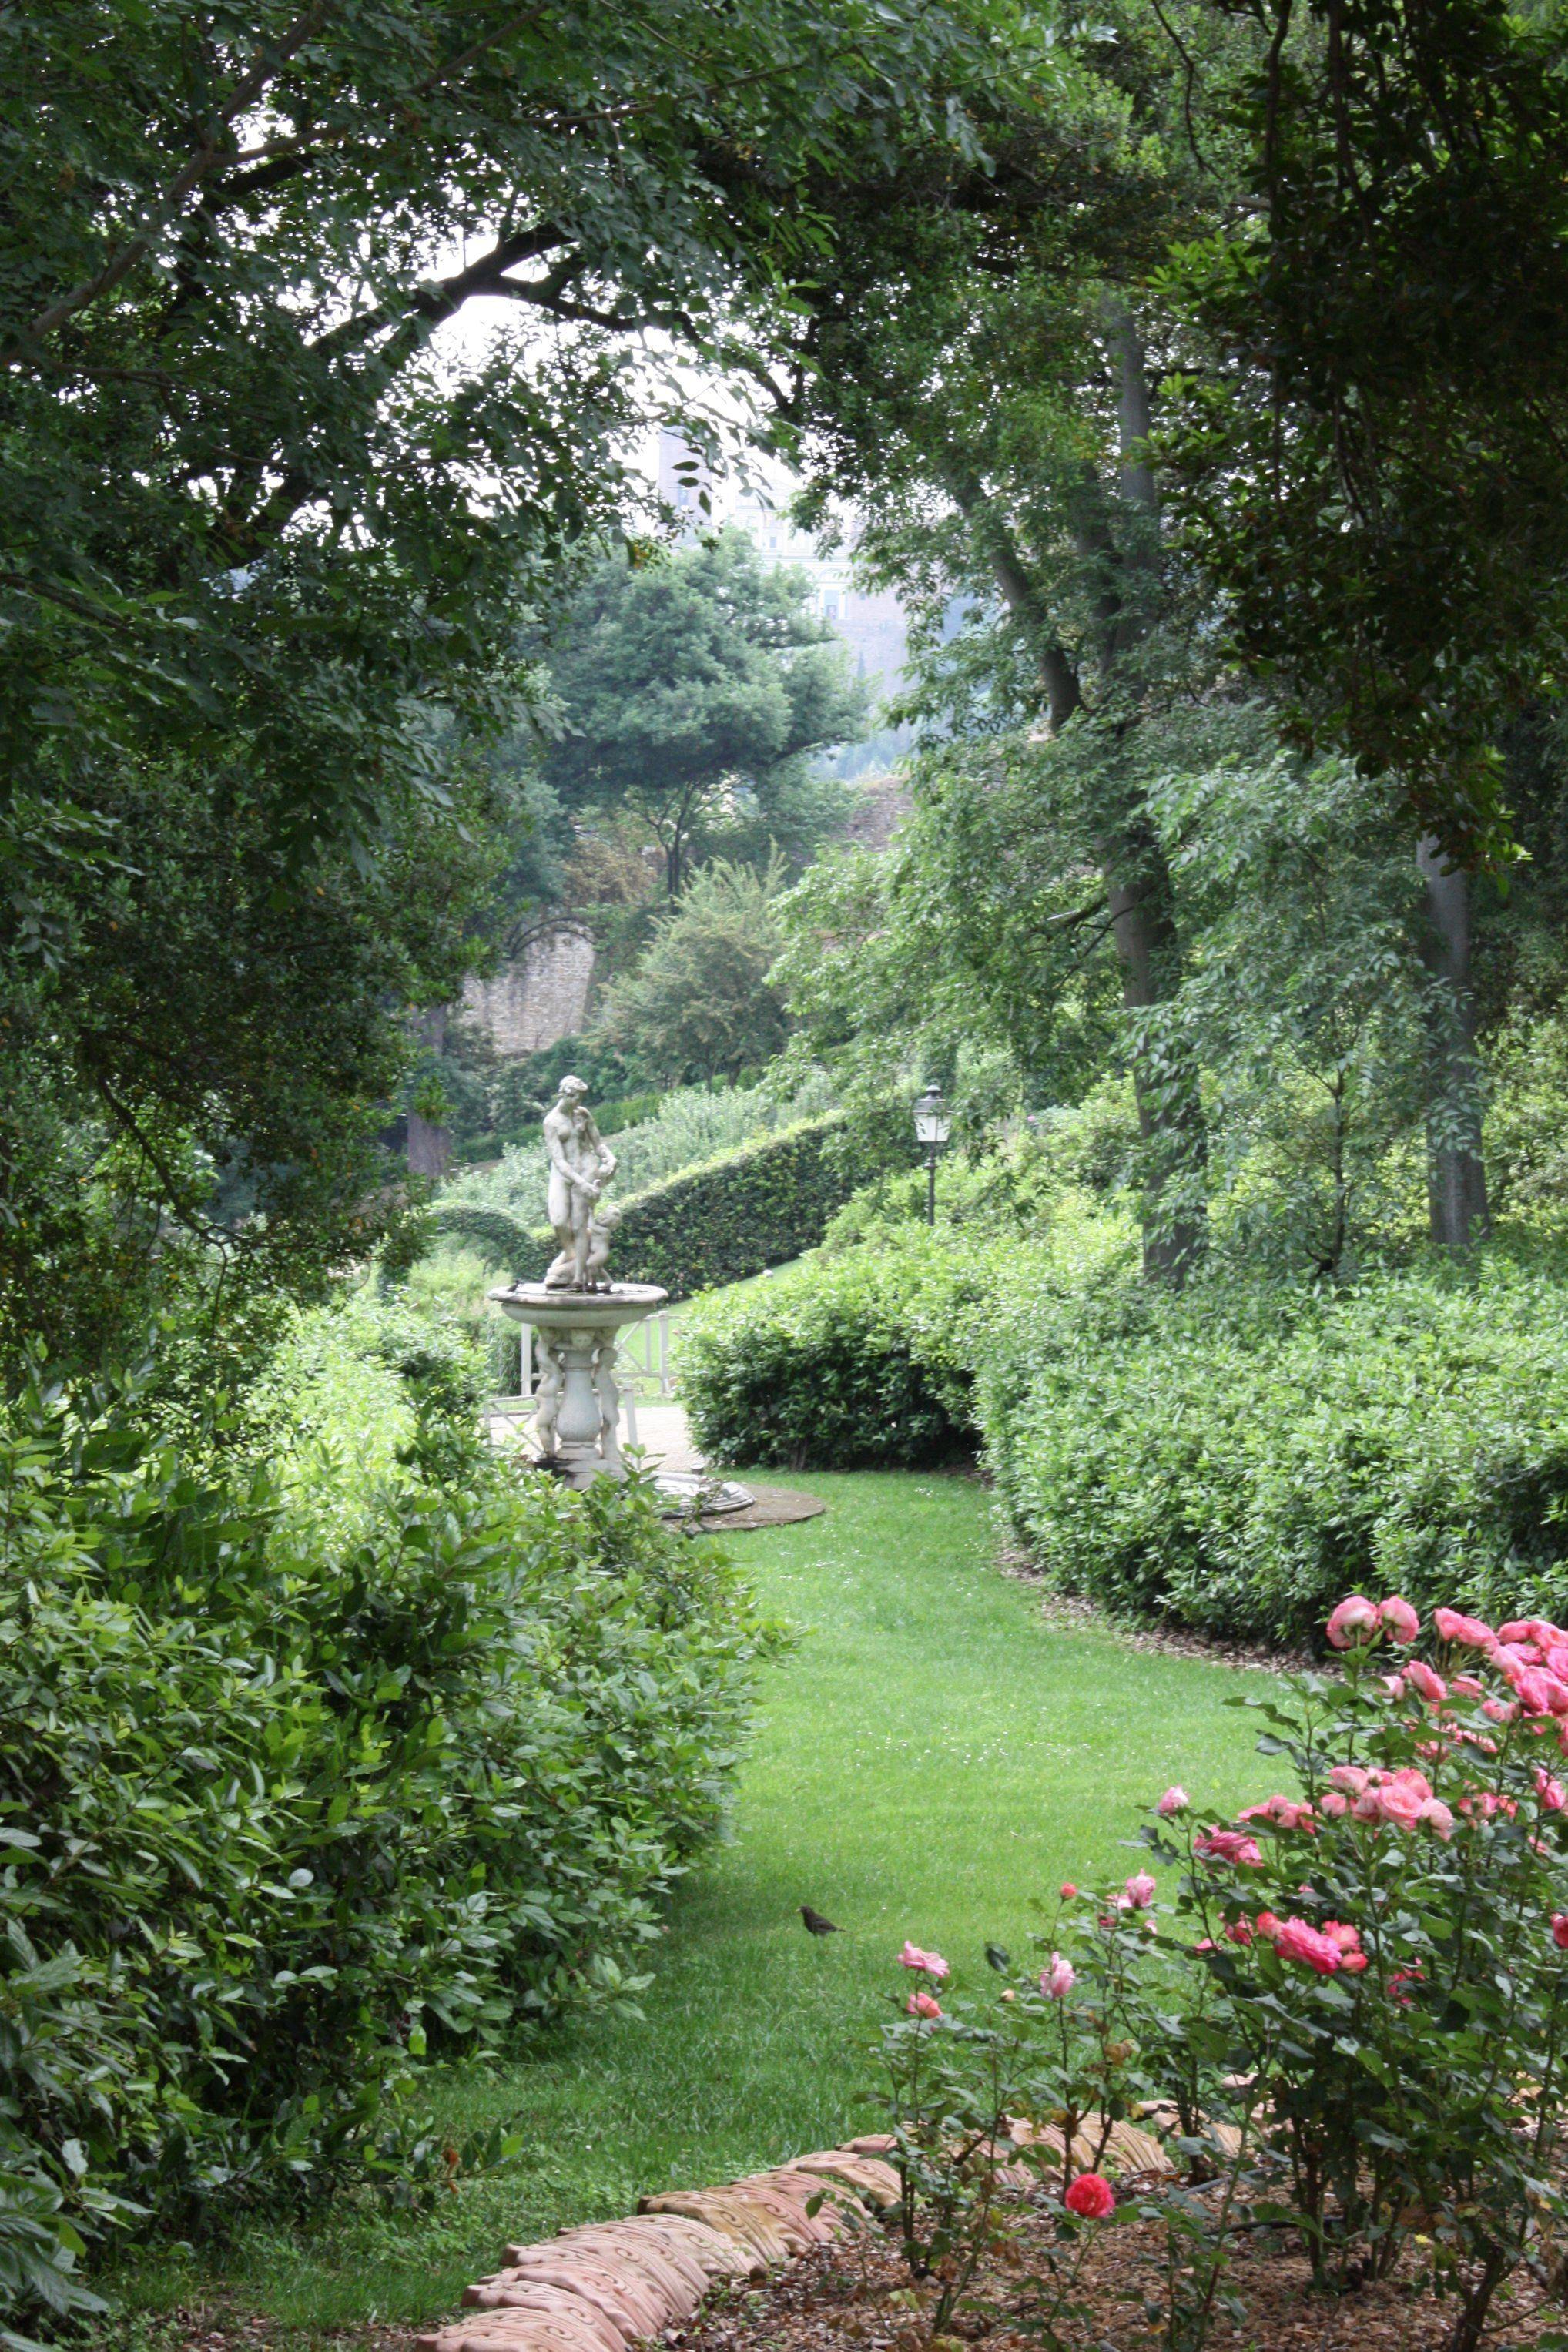 A Beautiful Italian Style Garden